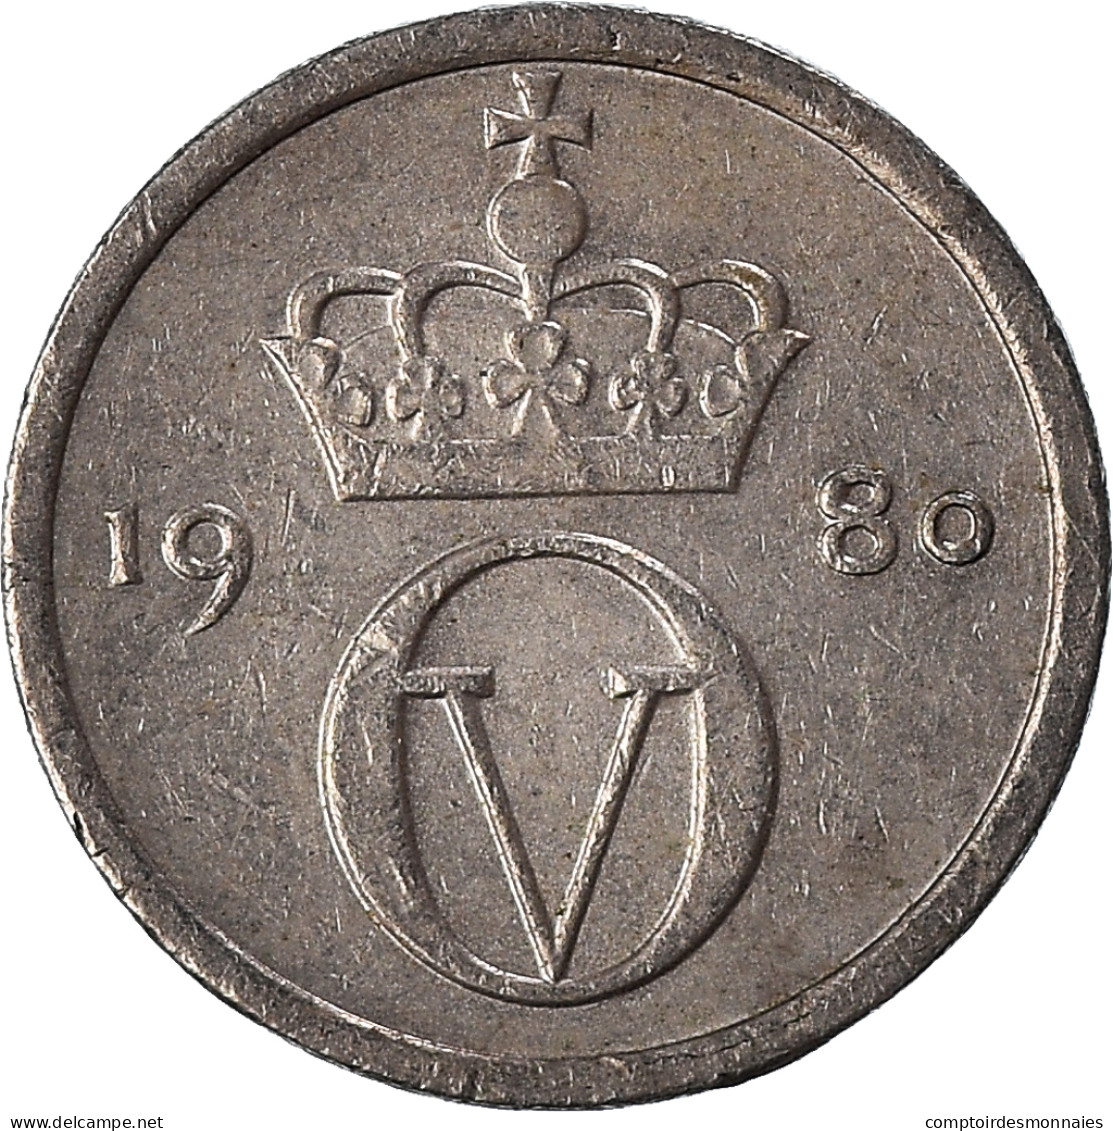 Monnaie, Norvège, 10 Öre, 1980 - Norway